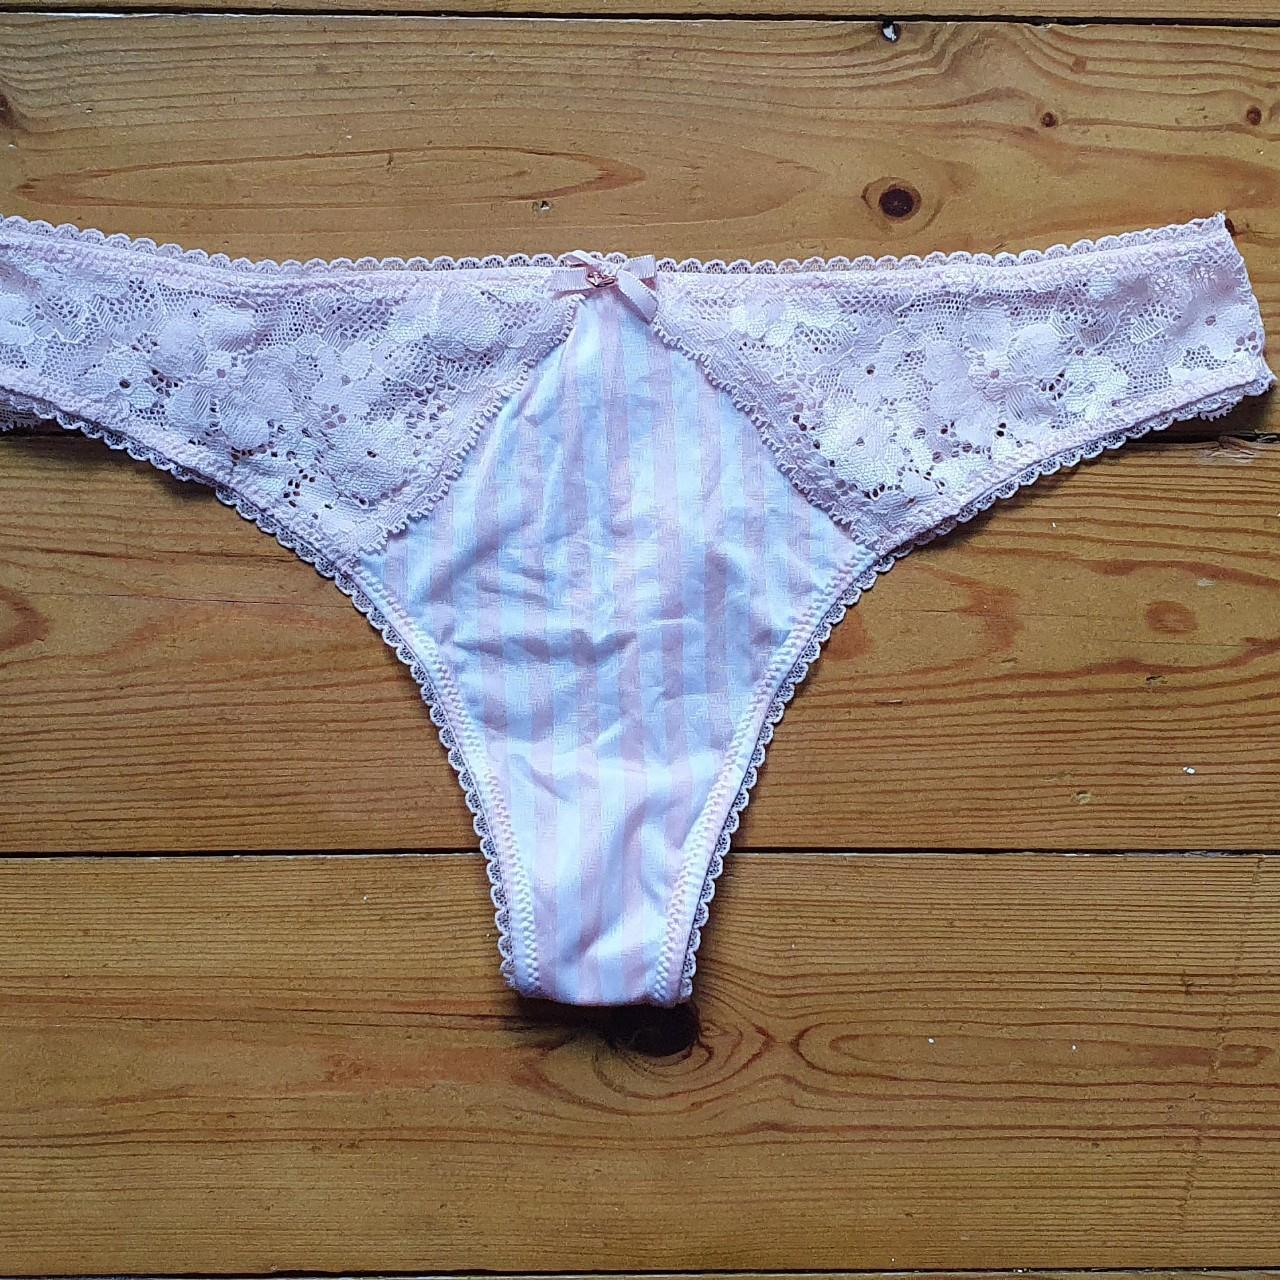 Completely unused, new Victoria secret underwear in - Depop